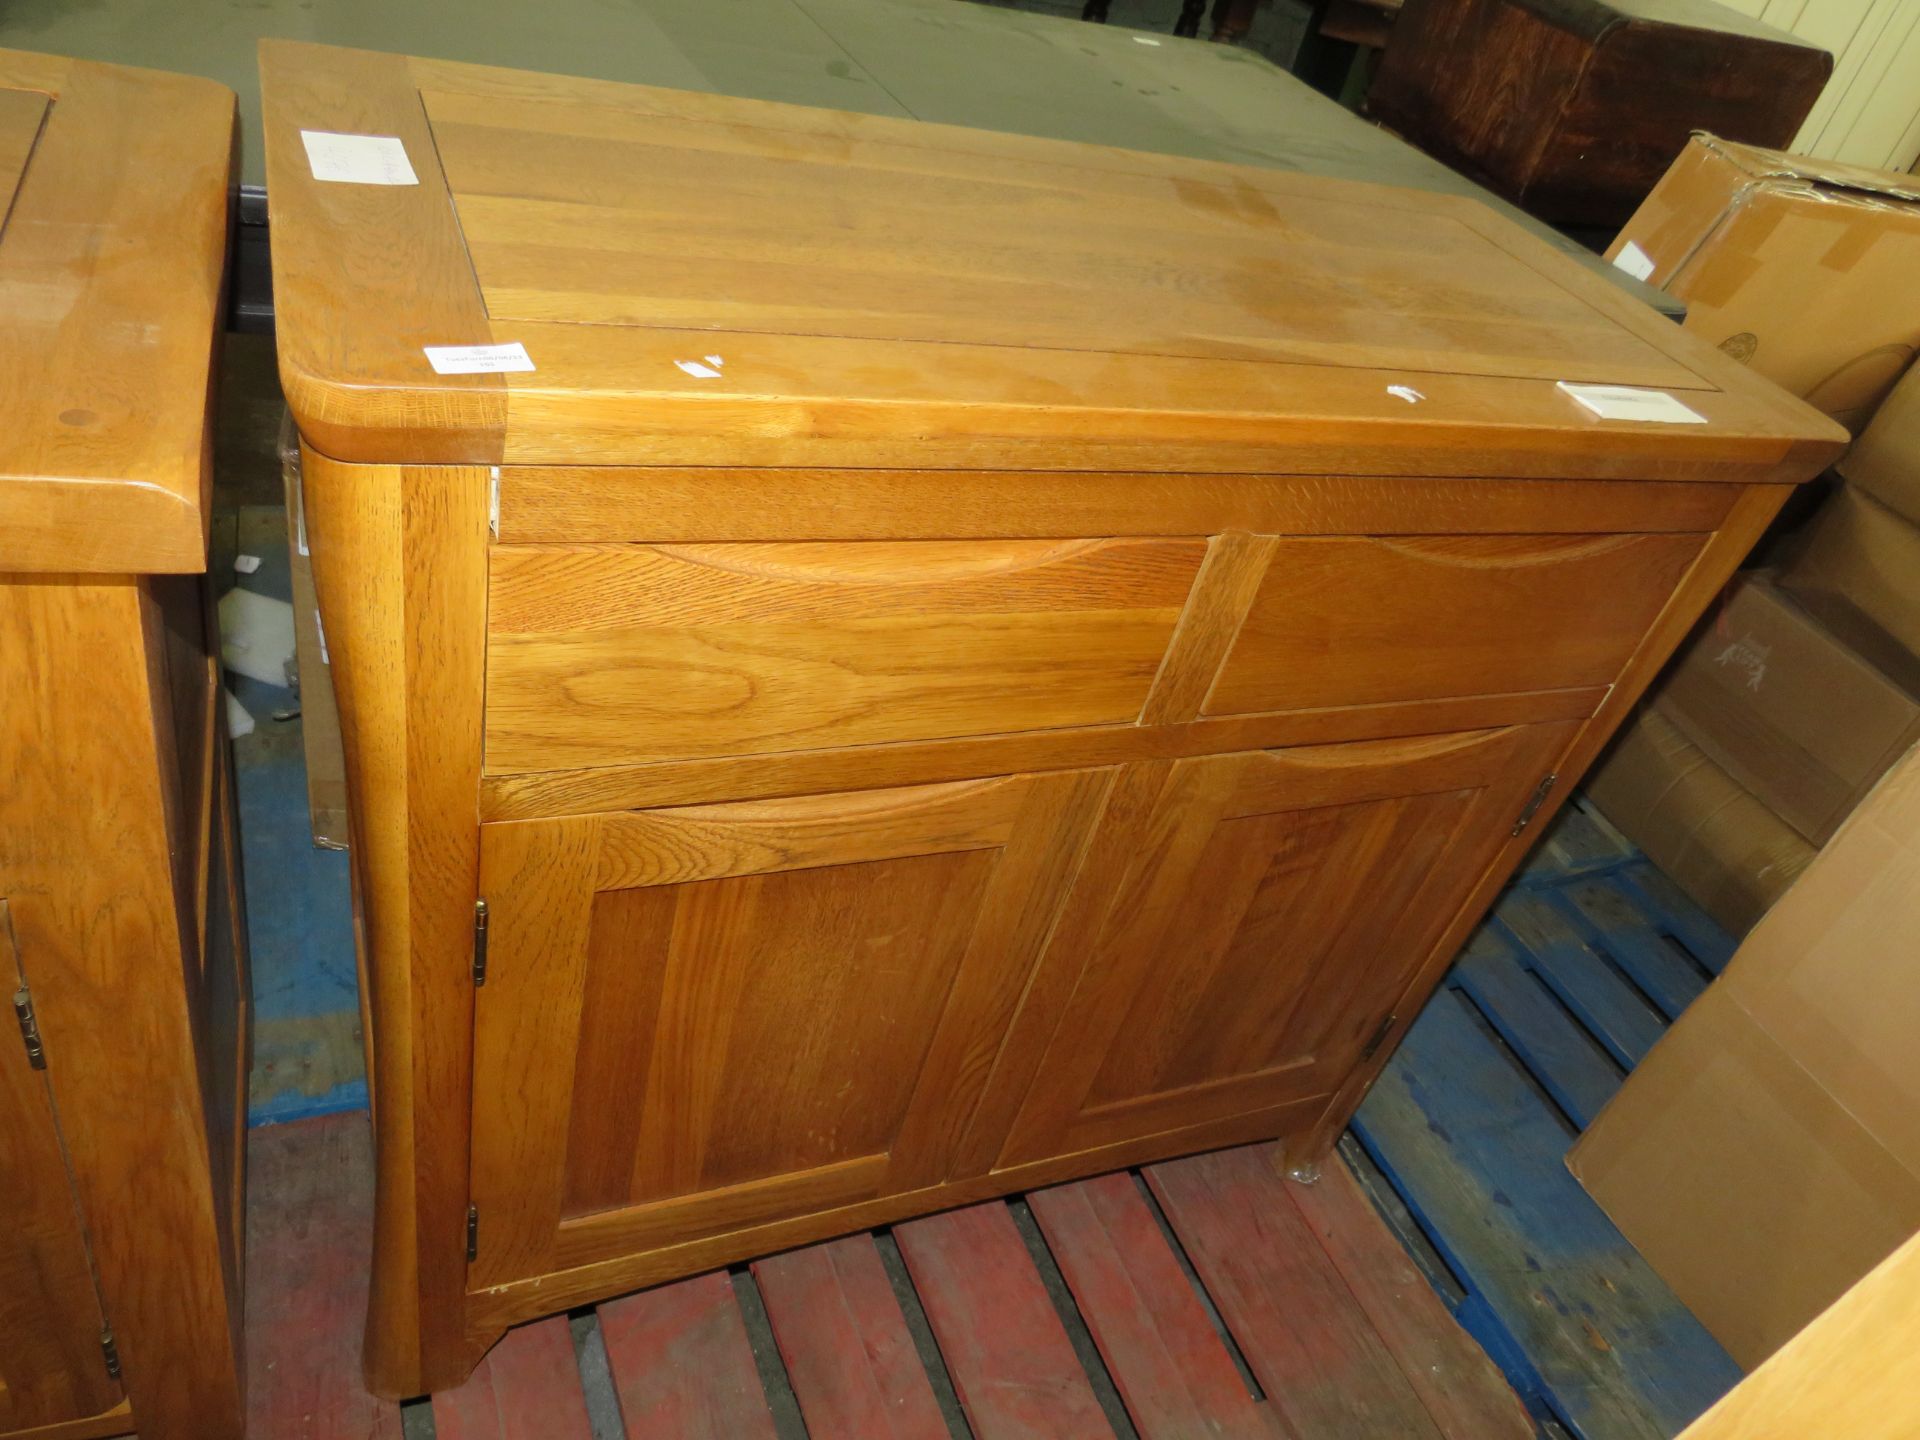 Oak Furnitureland Original Rustic Solid Oak Small Sideboard RRP 319.99 The Original Rustic Oak